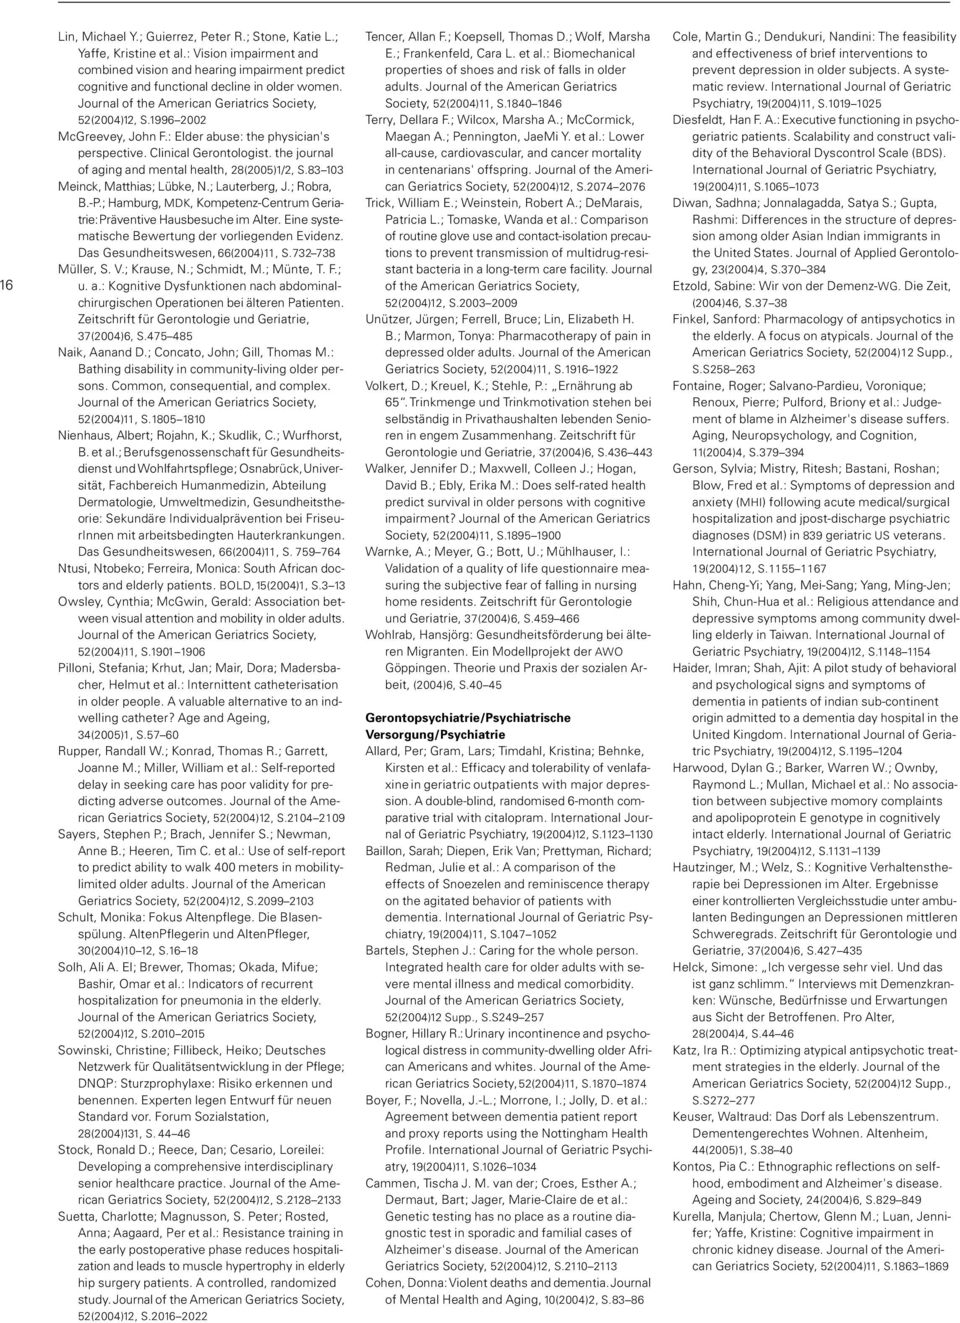 the journal of aging and mental health, 28(2005)1/2, S.83 103 Meinck, Matthias; Lübke, N.; Lauterberg, J.; Robra, B.-P.; Hamburg, MDK, Kompetenz-Centrum Geriatrie:Präventive Hausbesuche im Alter.